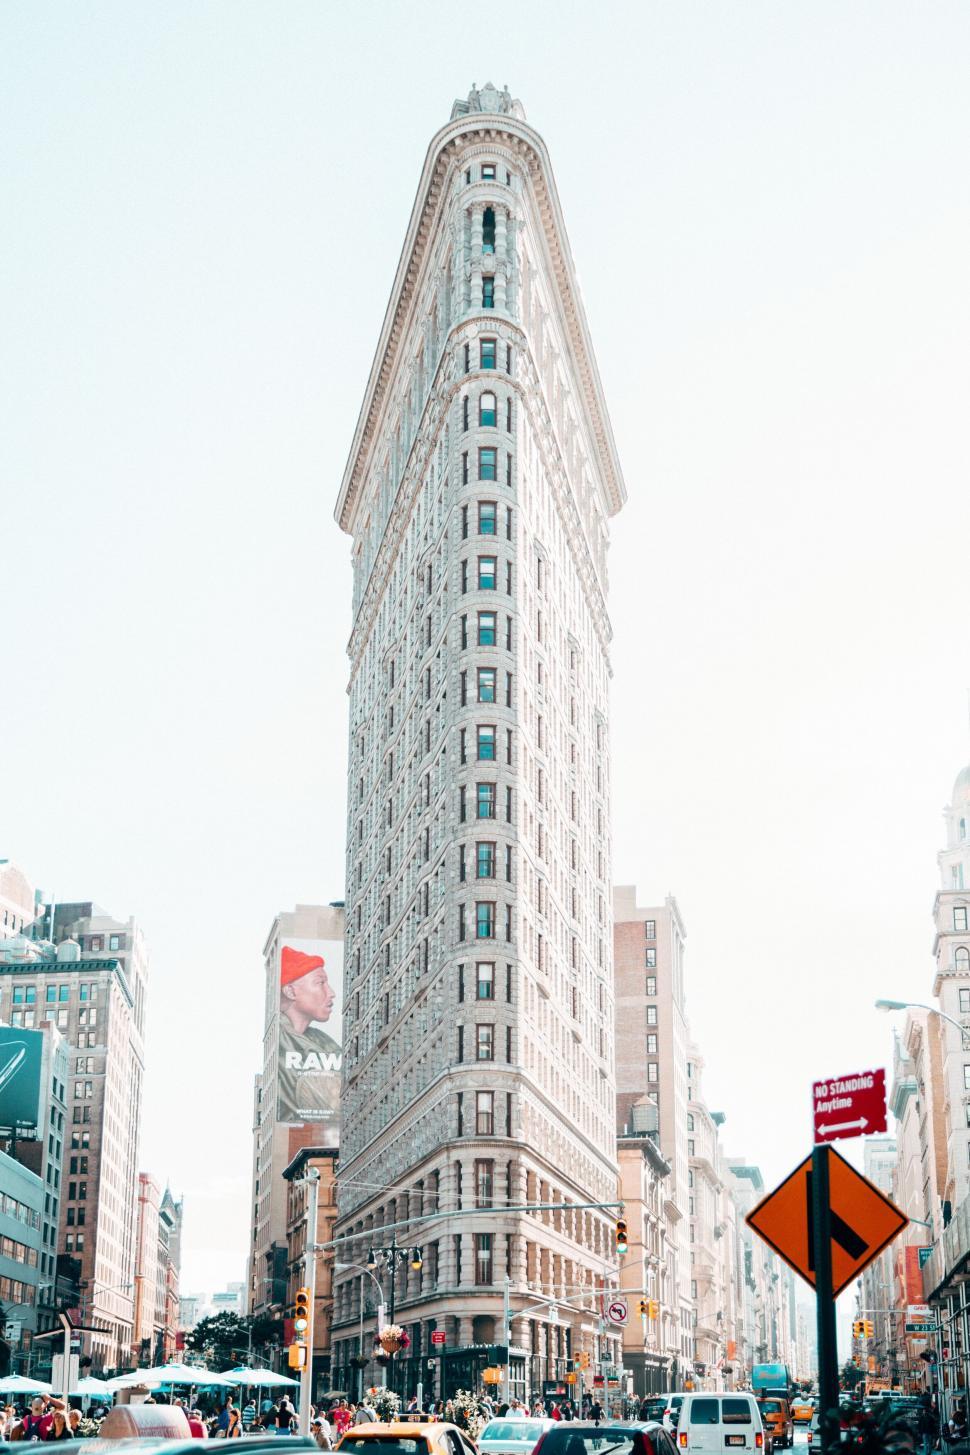 Free Image of Iconic Flatiron Building in New York City 